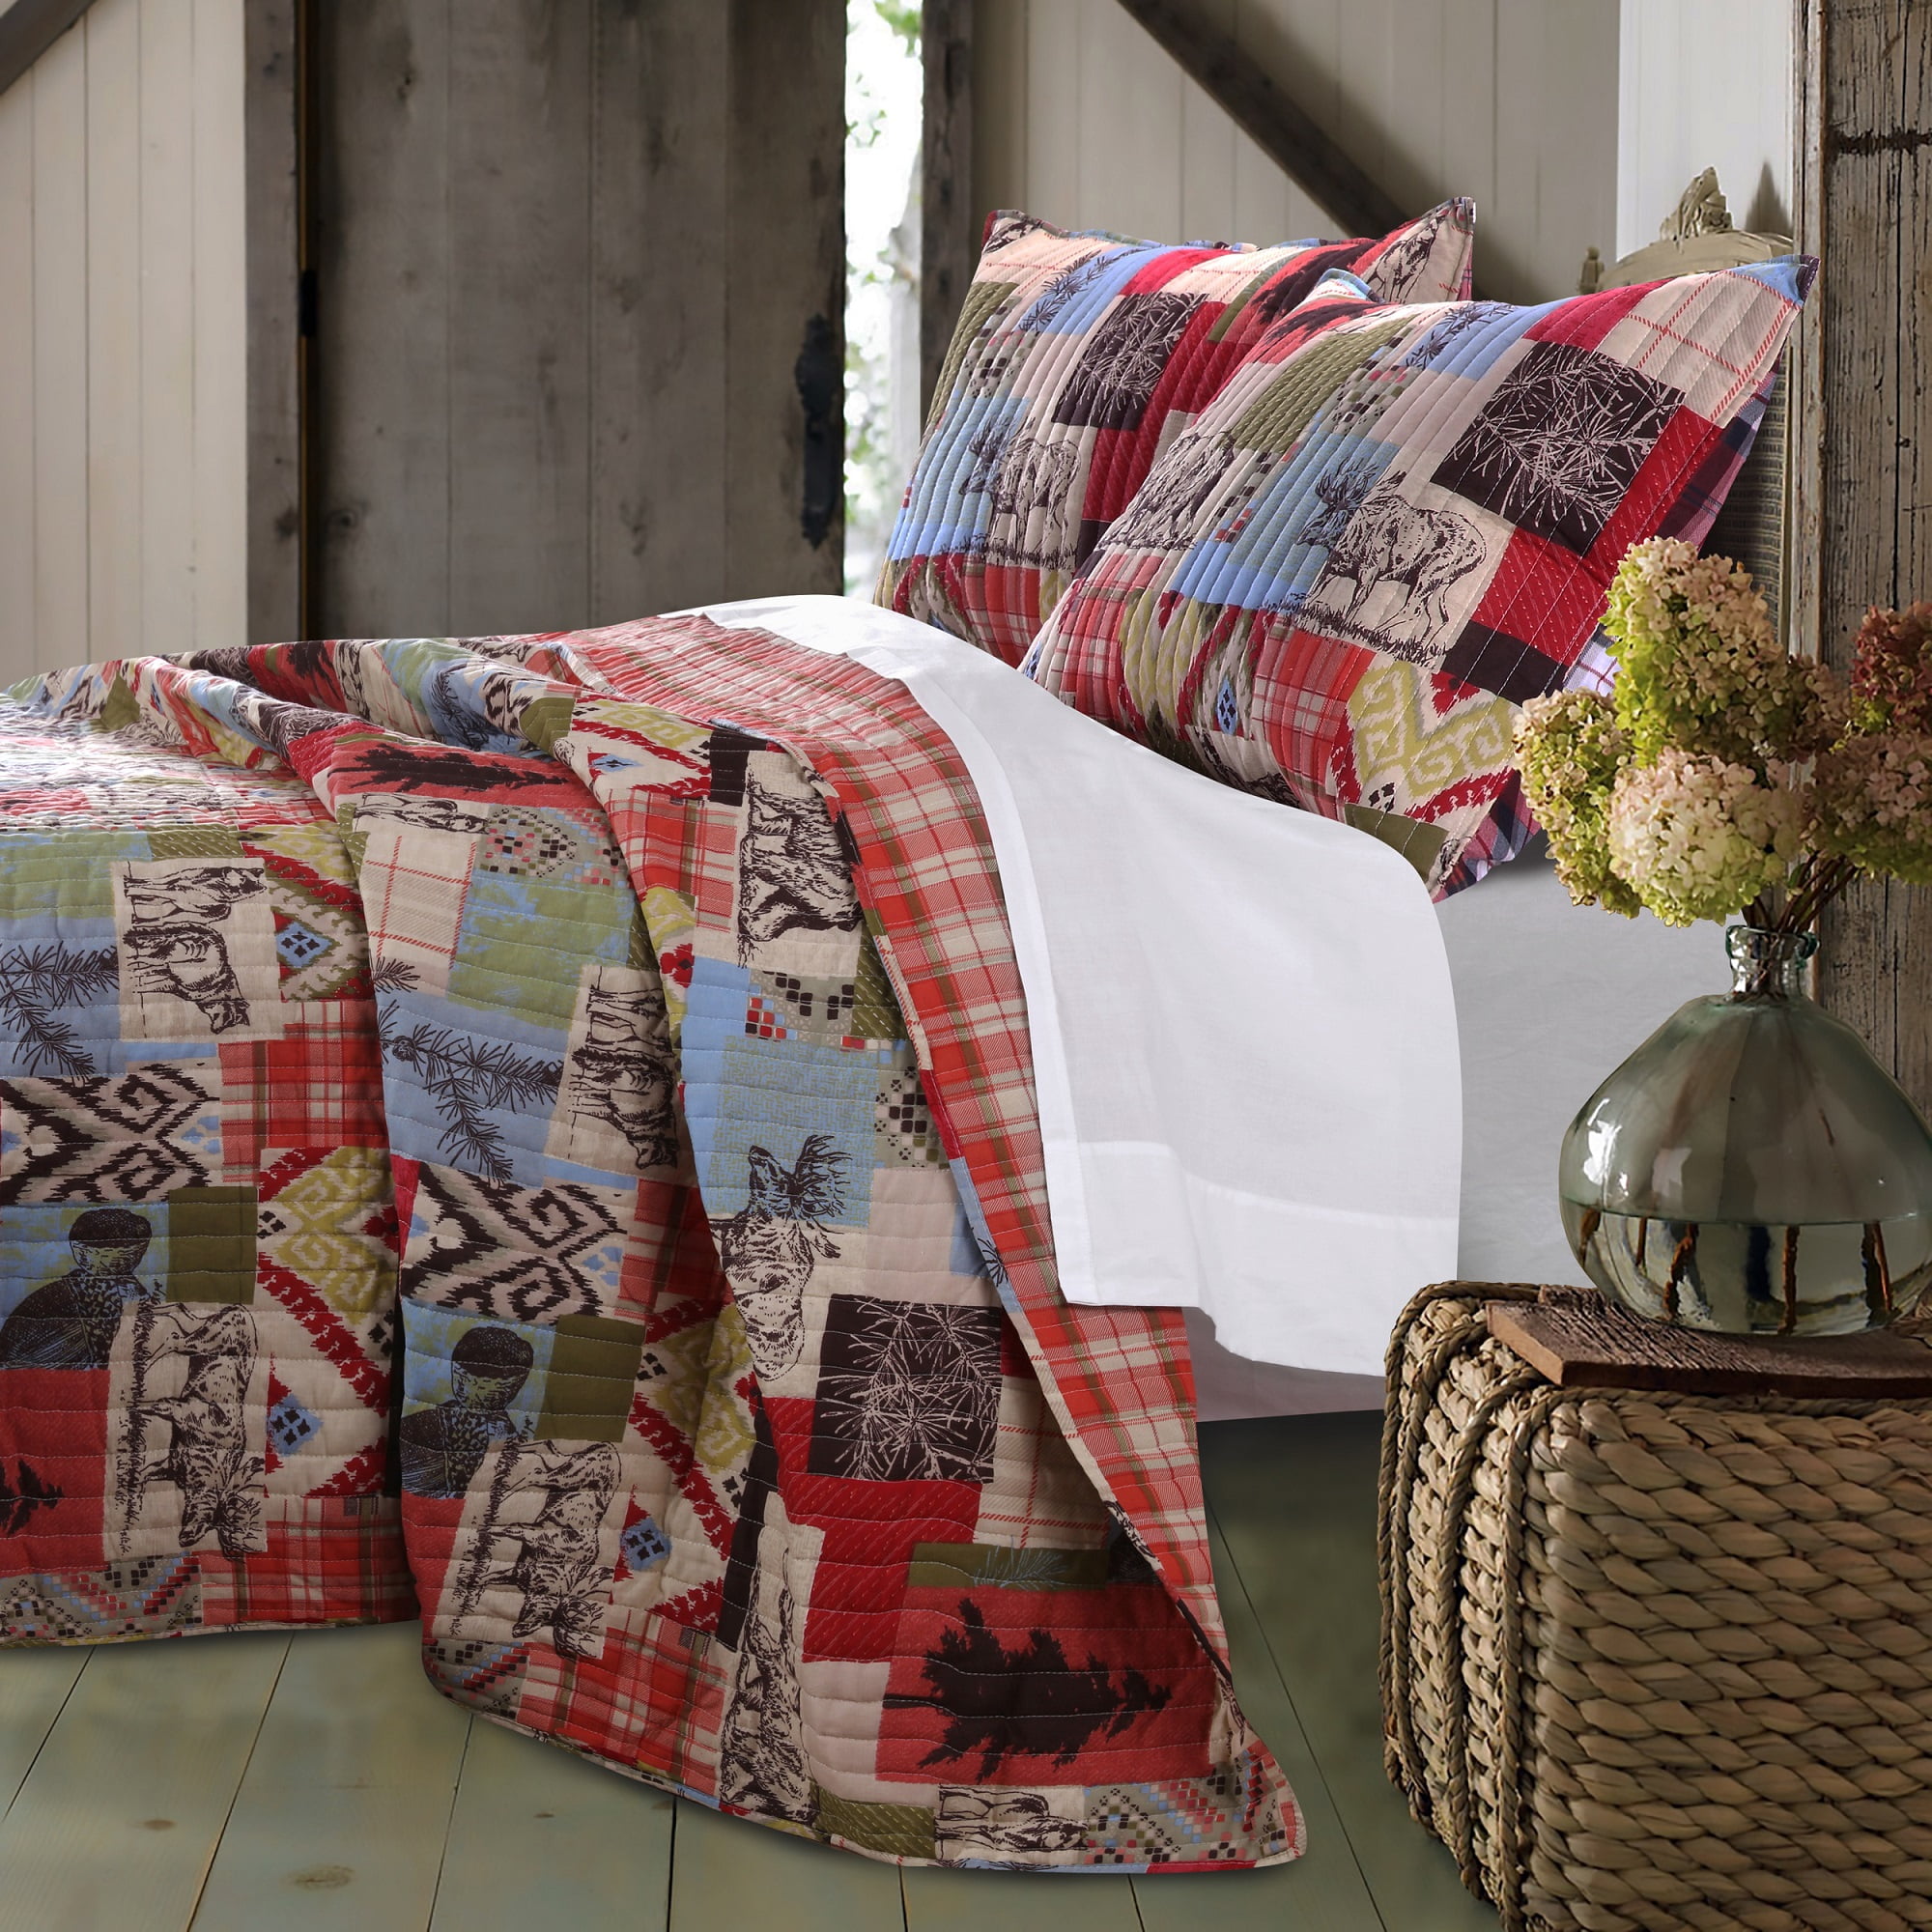 Somerset Home Printed Savannah Quilt Bedding Set for sale online 